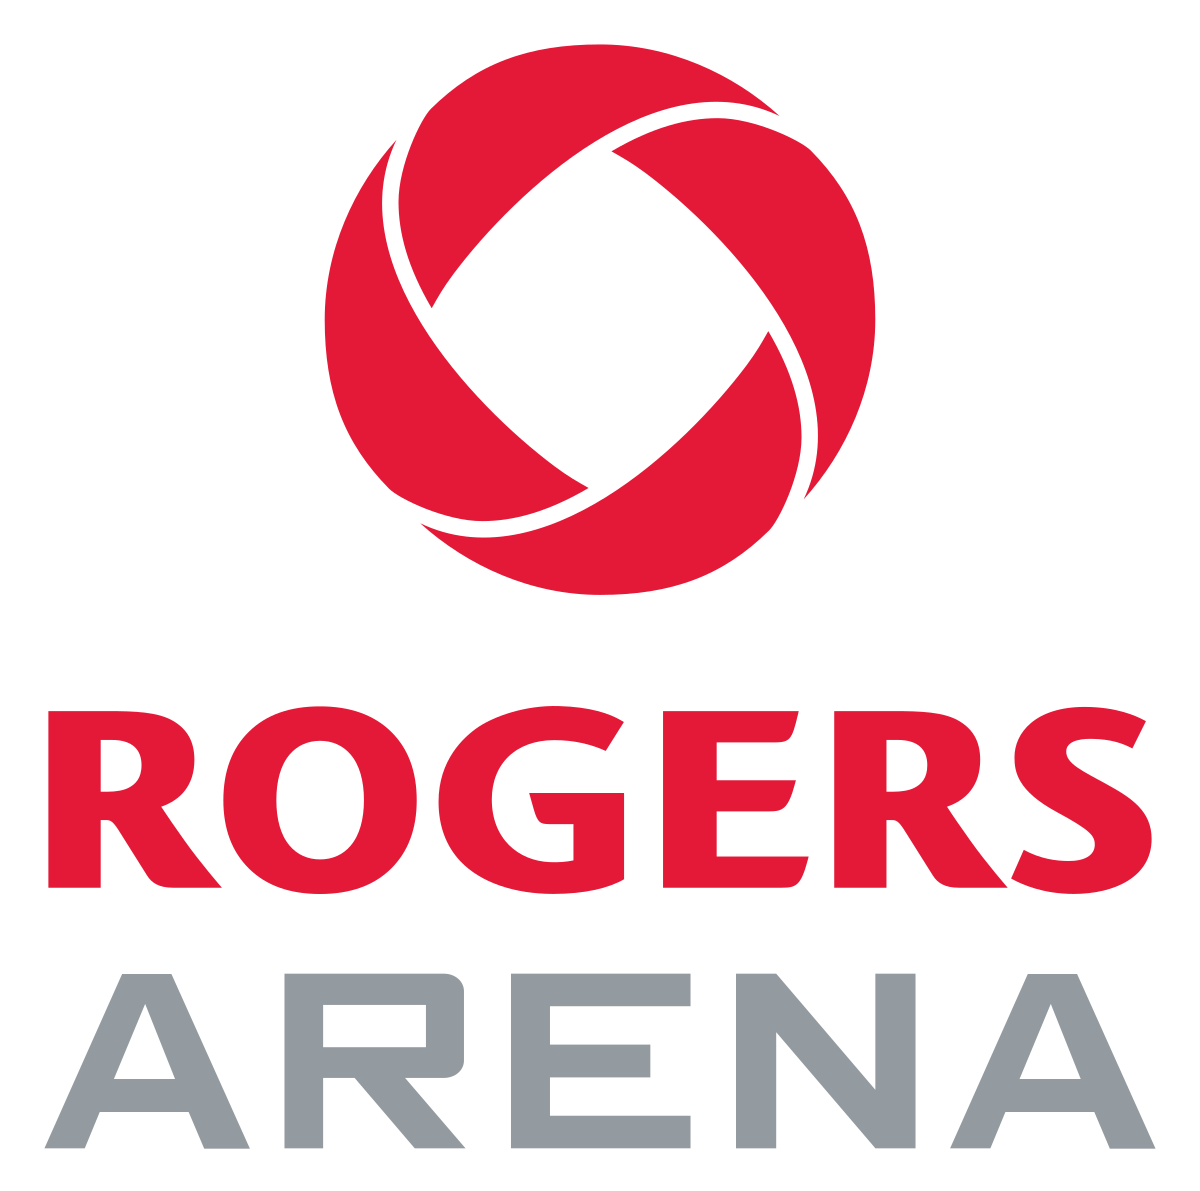 Vancouver Canucks Retro Logo SVG - Free Sports Logo Downloads